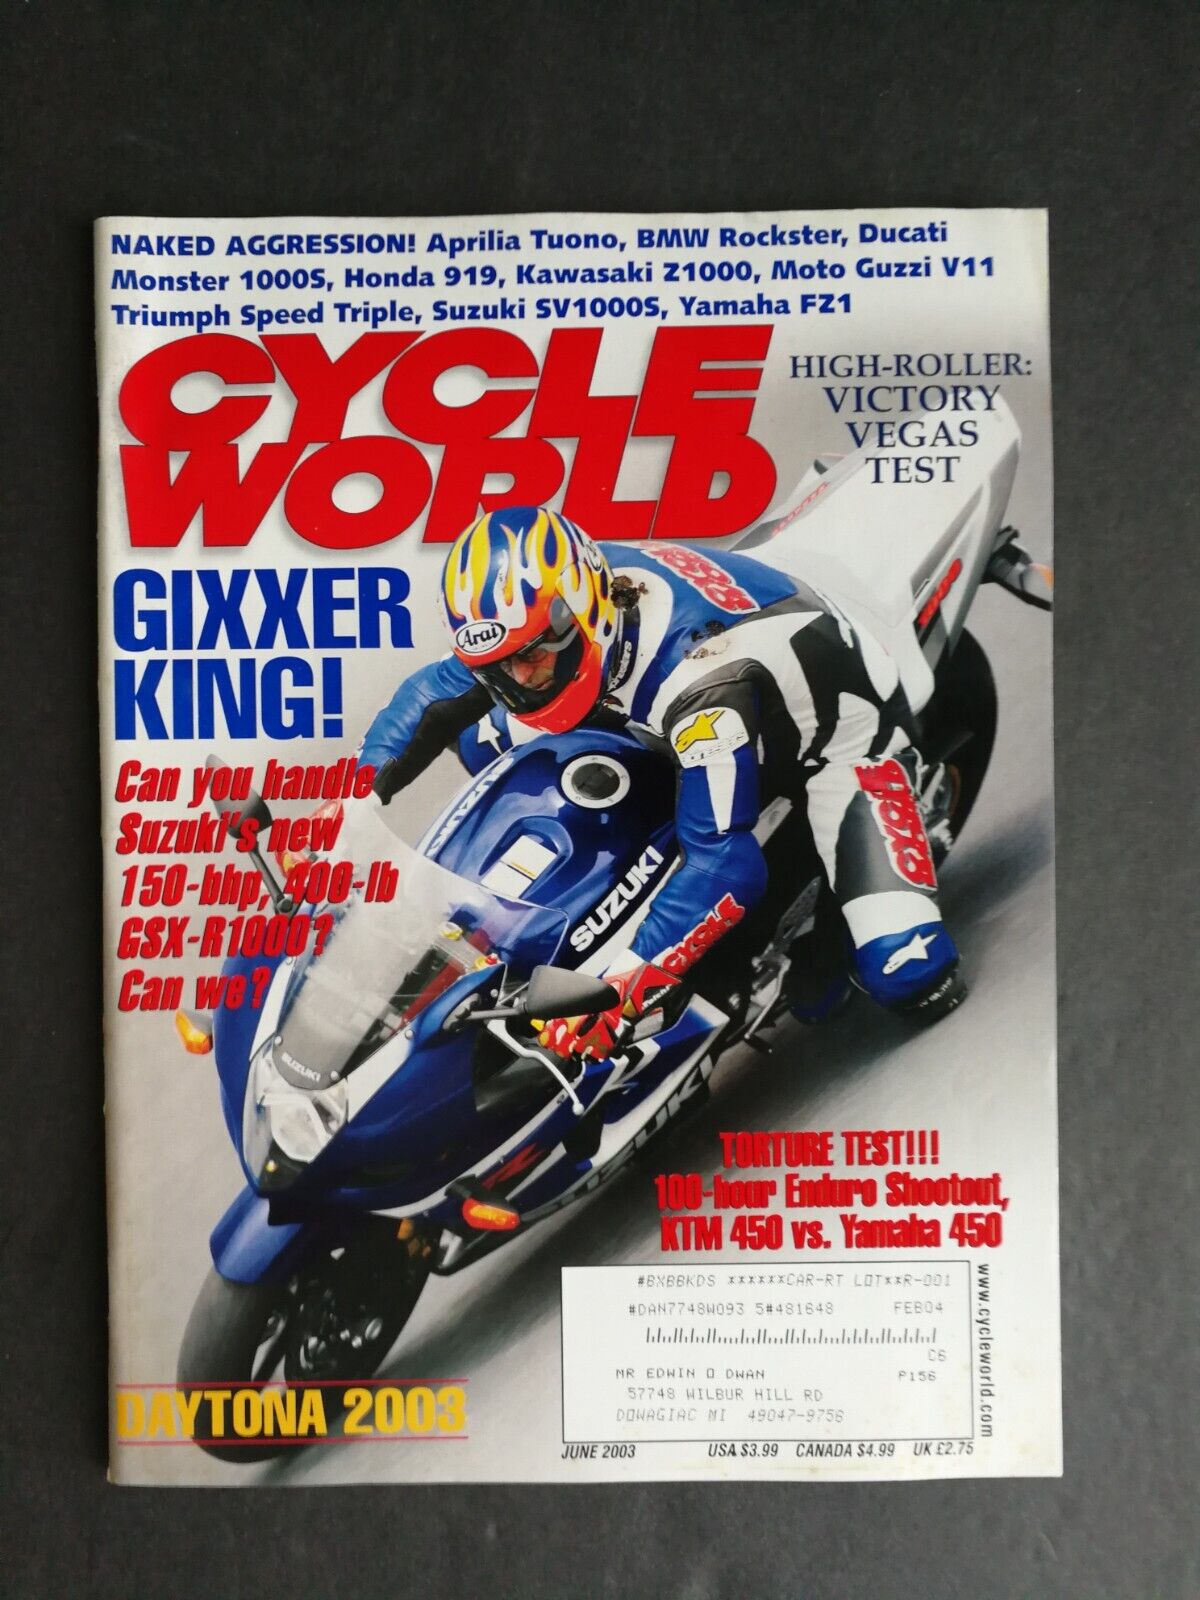 Cycle World Magazine June 2003 KTM 450 vs Yamaha 450  Suzuki GSX-R1000 - 223